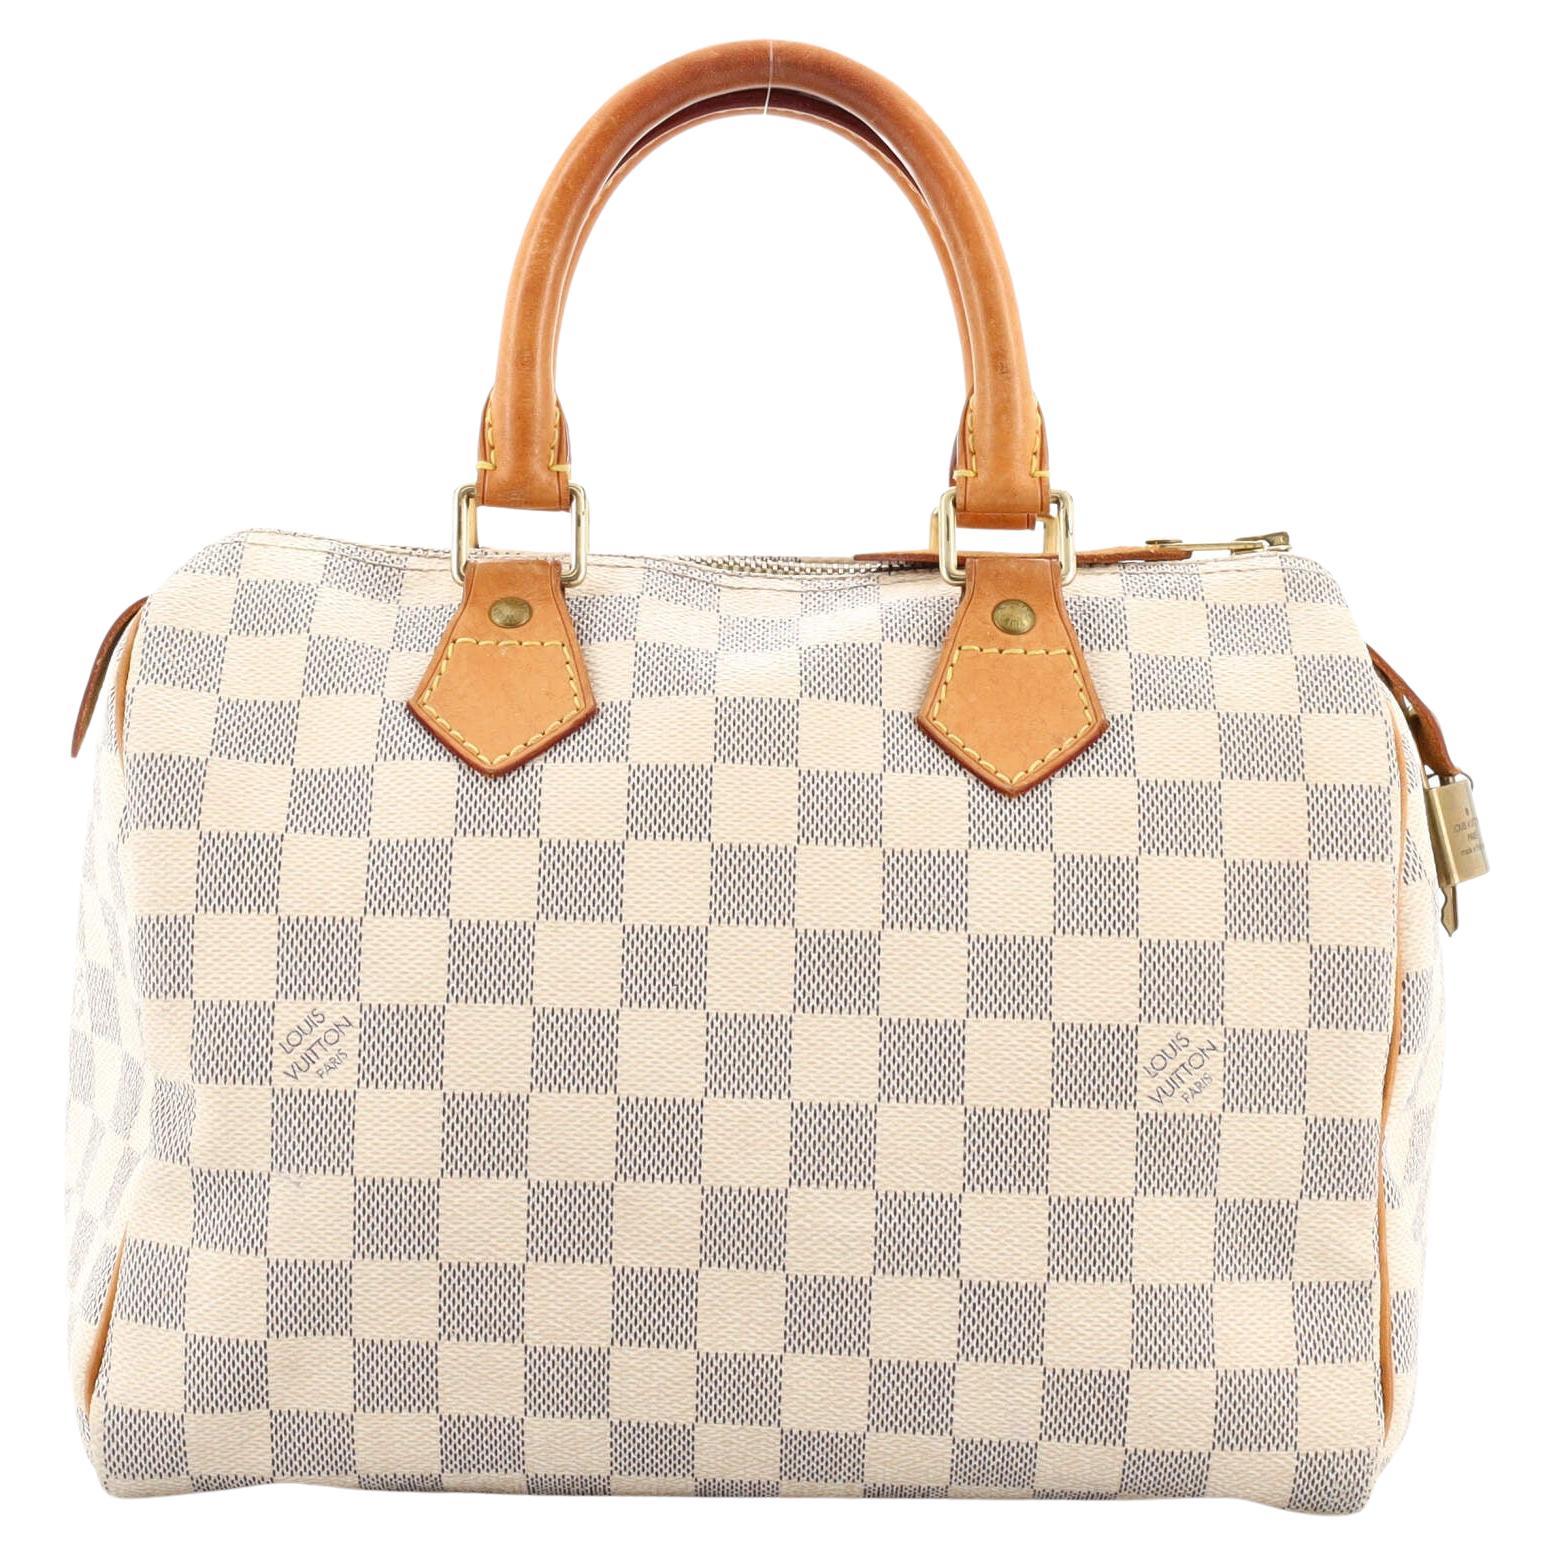 Louis Vuitton Speedy Handbag Damier 25 For Sale